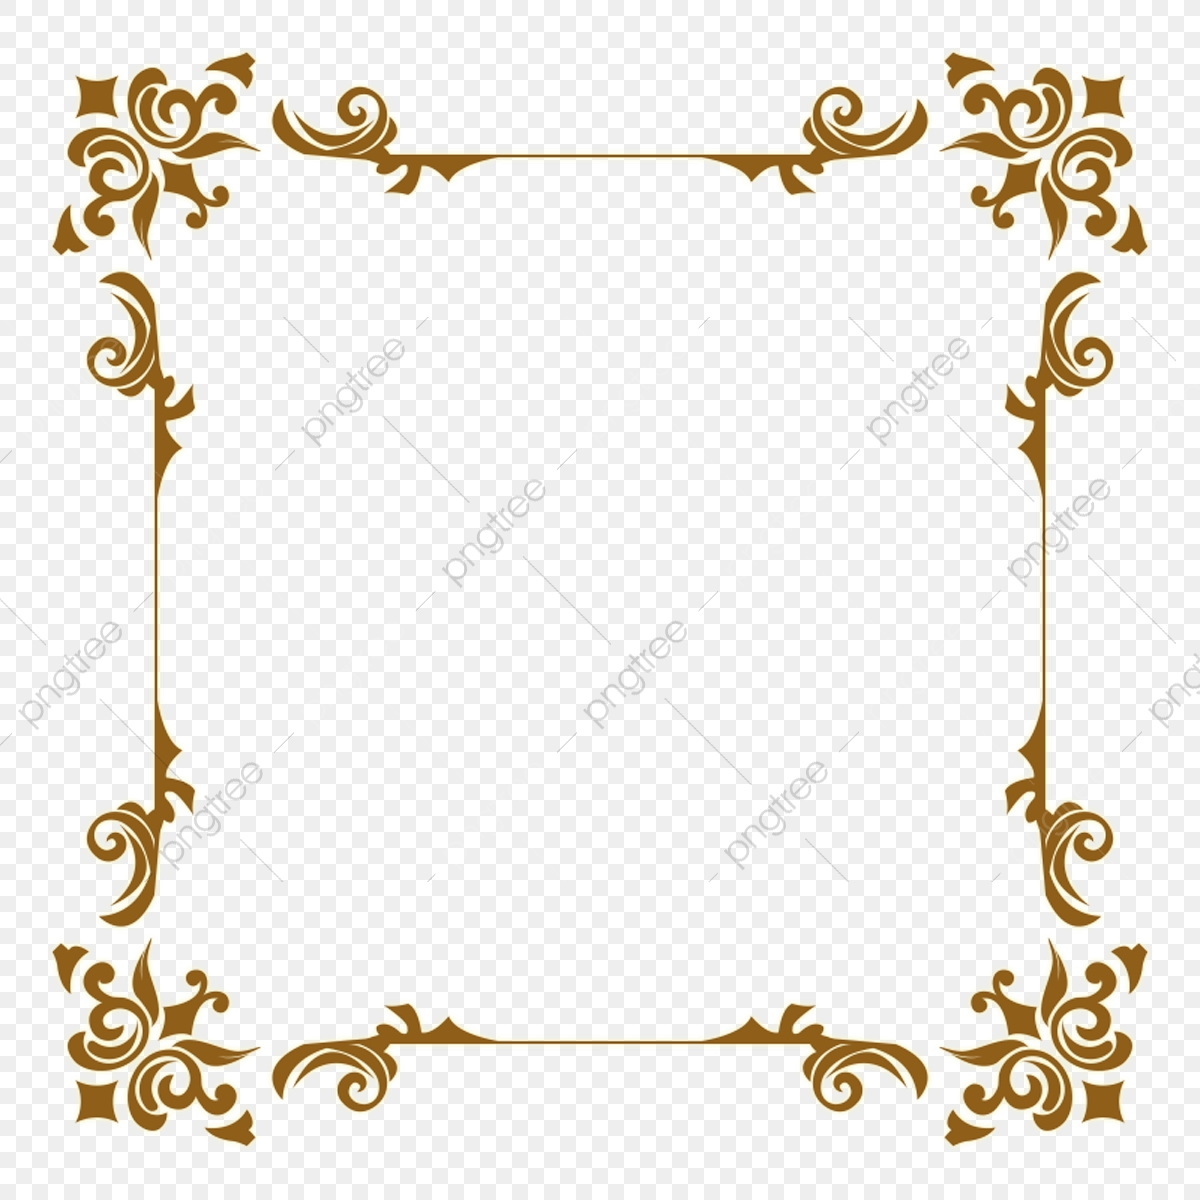 Decorative clipart decoration. Ornament frame border decor